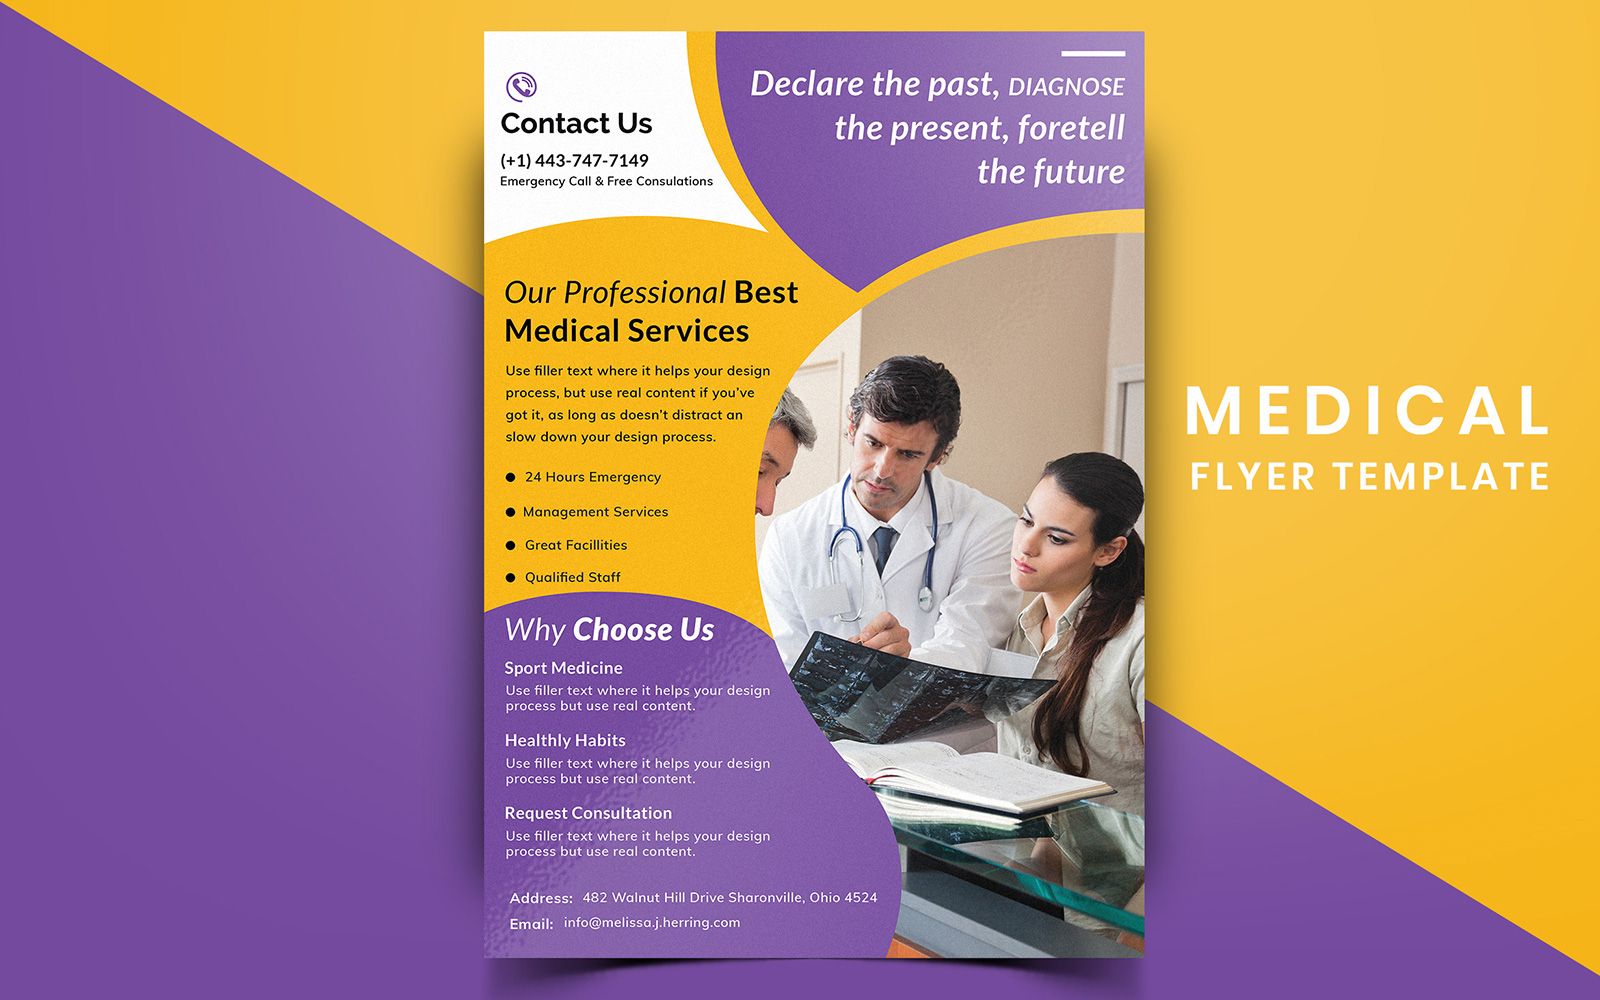 Deprimo - Medical Flyer Design - Corporate Identity Template